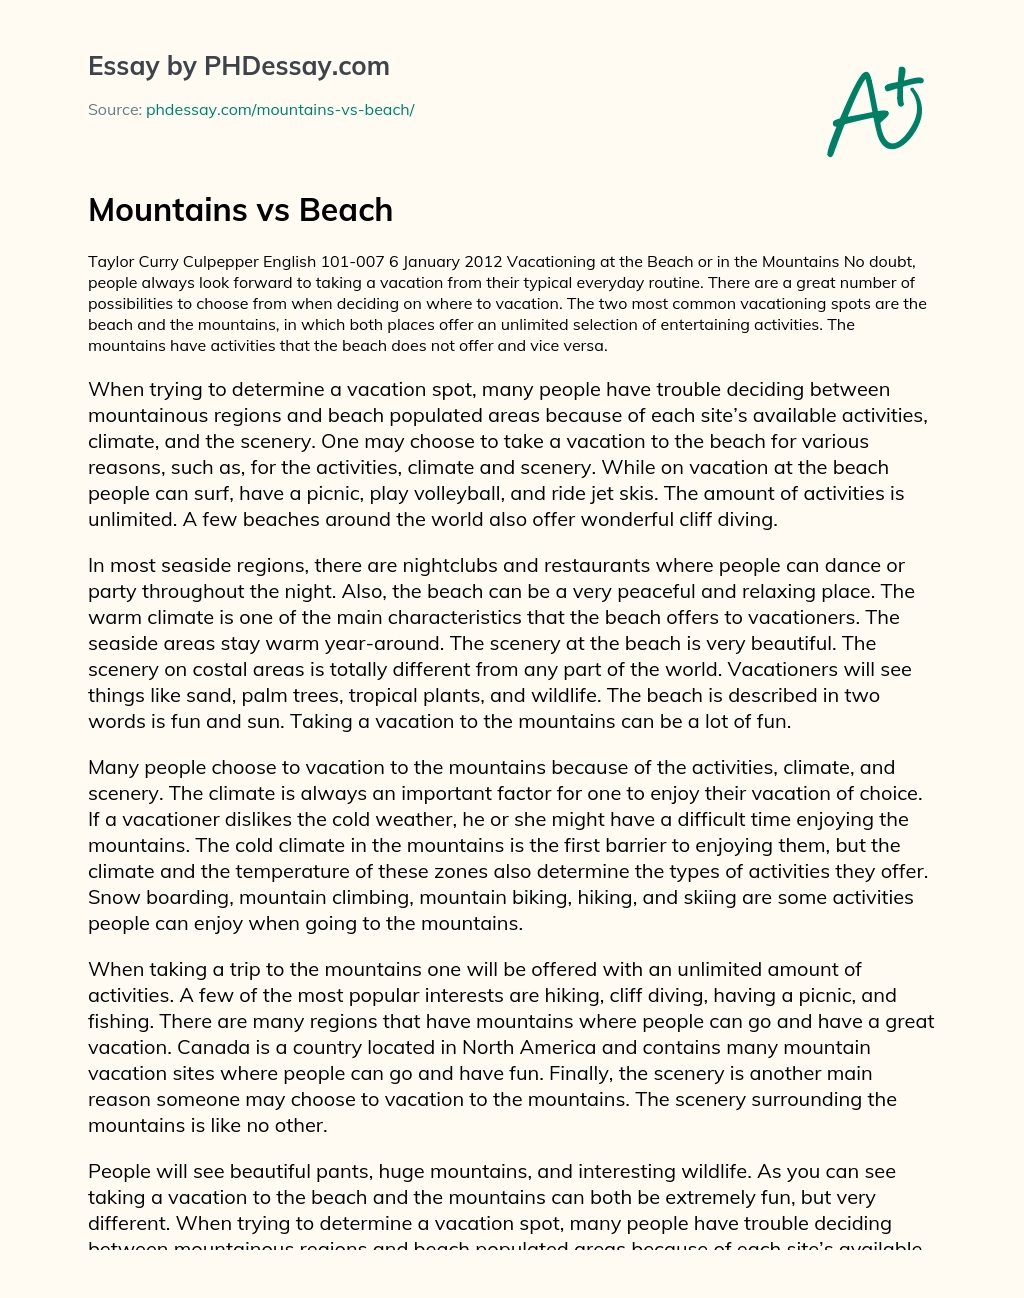 Mountains vs Beach essay